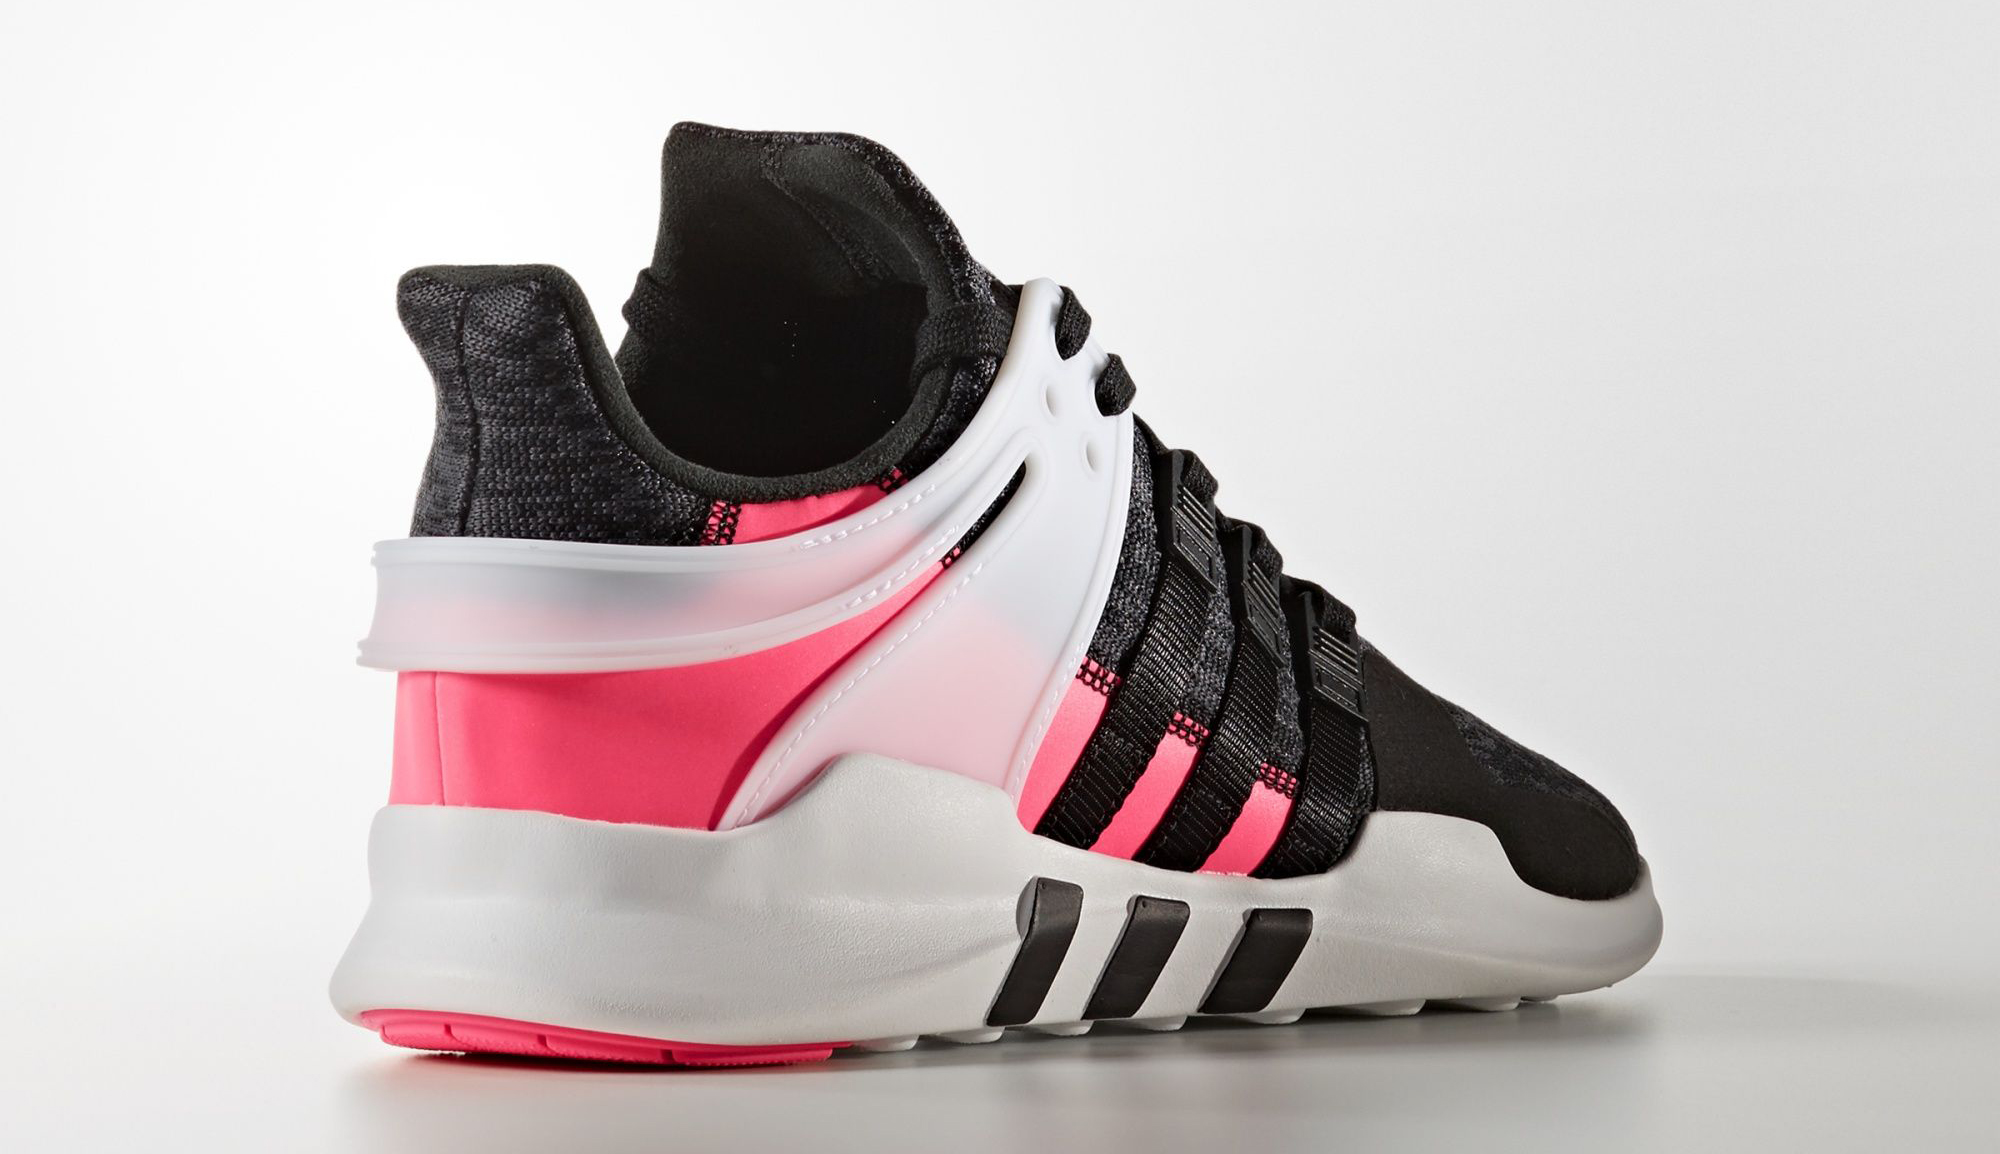 adidas eqt support adv turbo pink